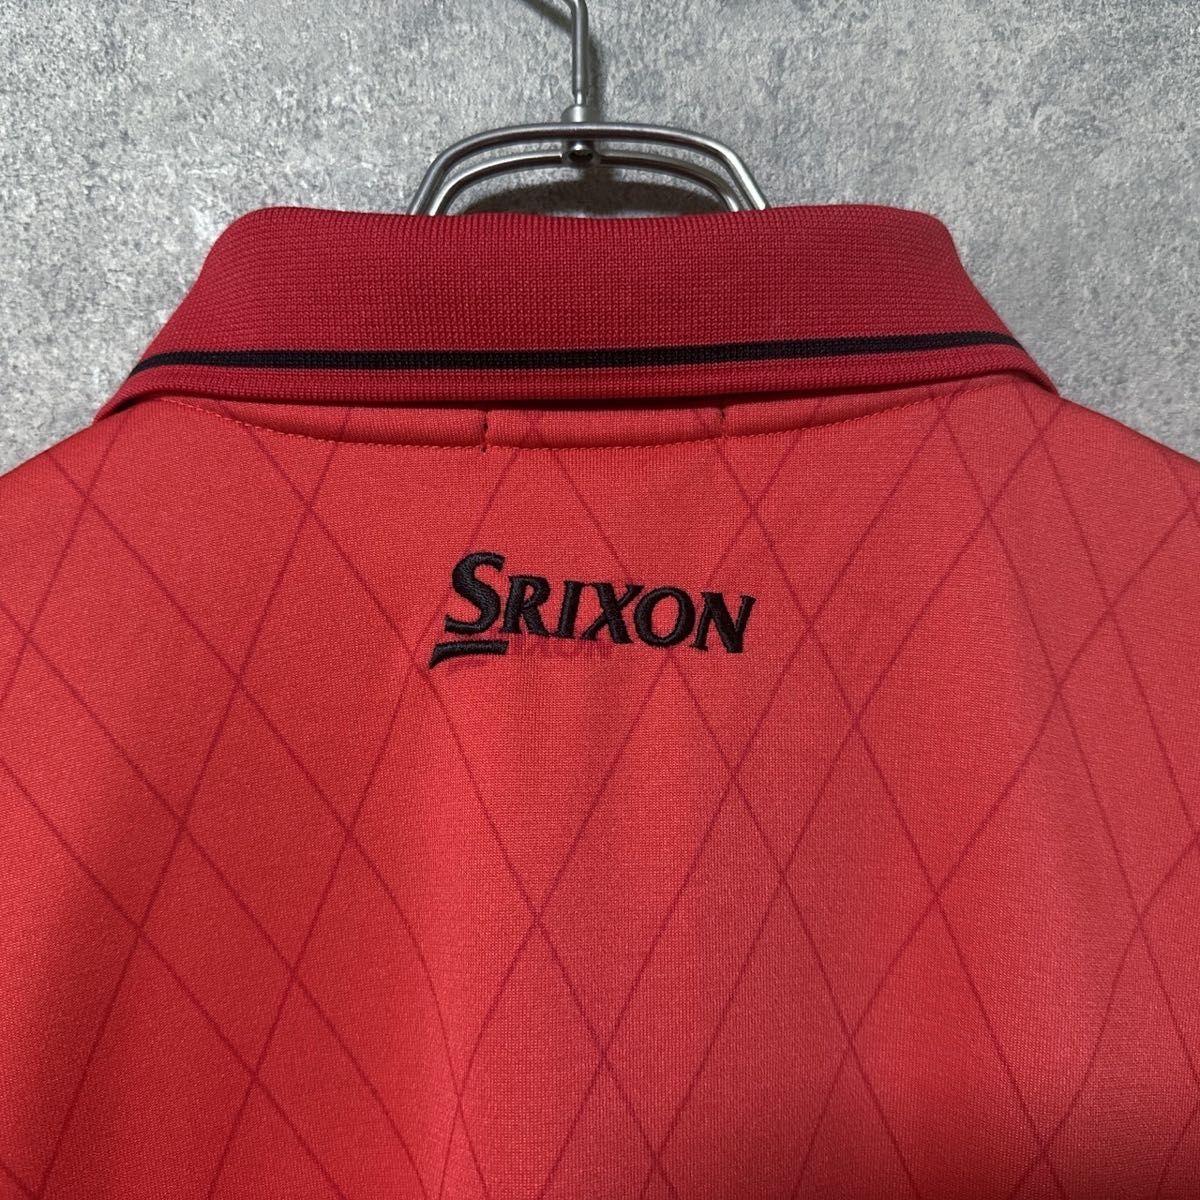 SRIXON スリクソン ロゴ ポロシャツ 長袖 ゴルフウェア メンズ L 柄 長袖 シャツ 襟付き ゴルフ ウェア スポーツ